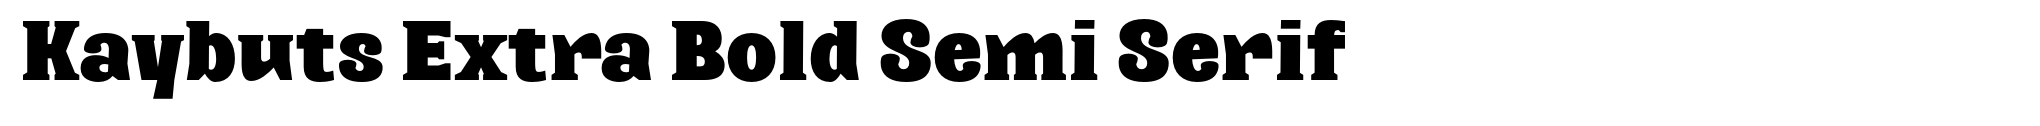 Kaybuts Extra Bold Semi Serif image